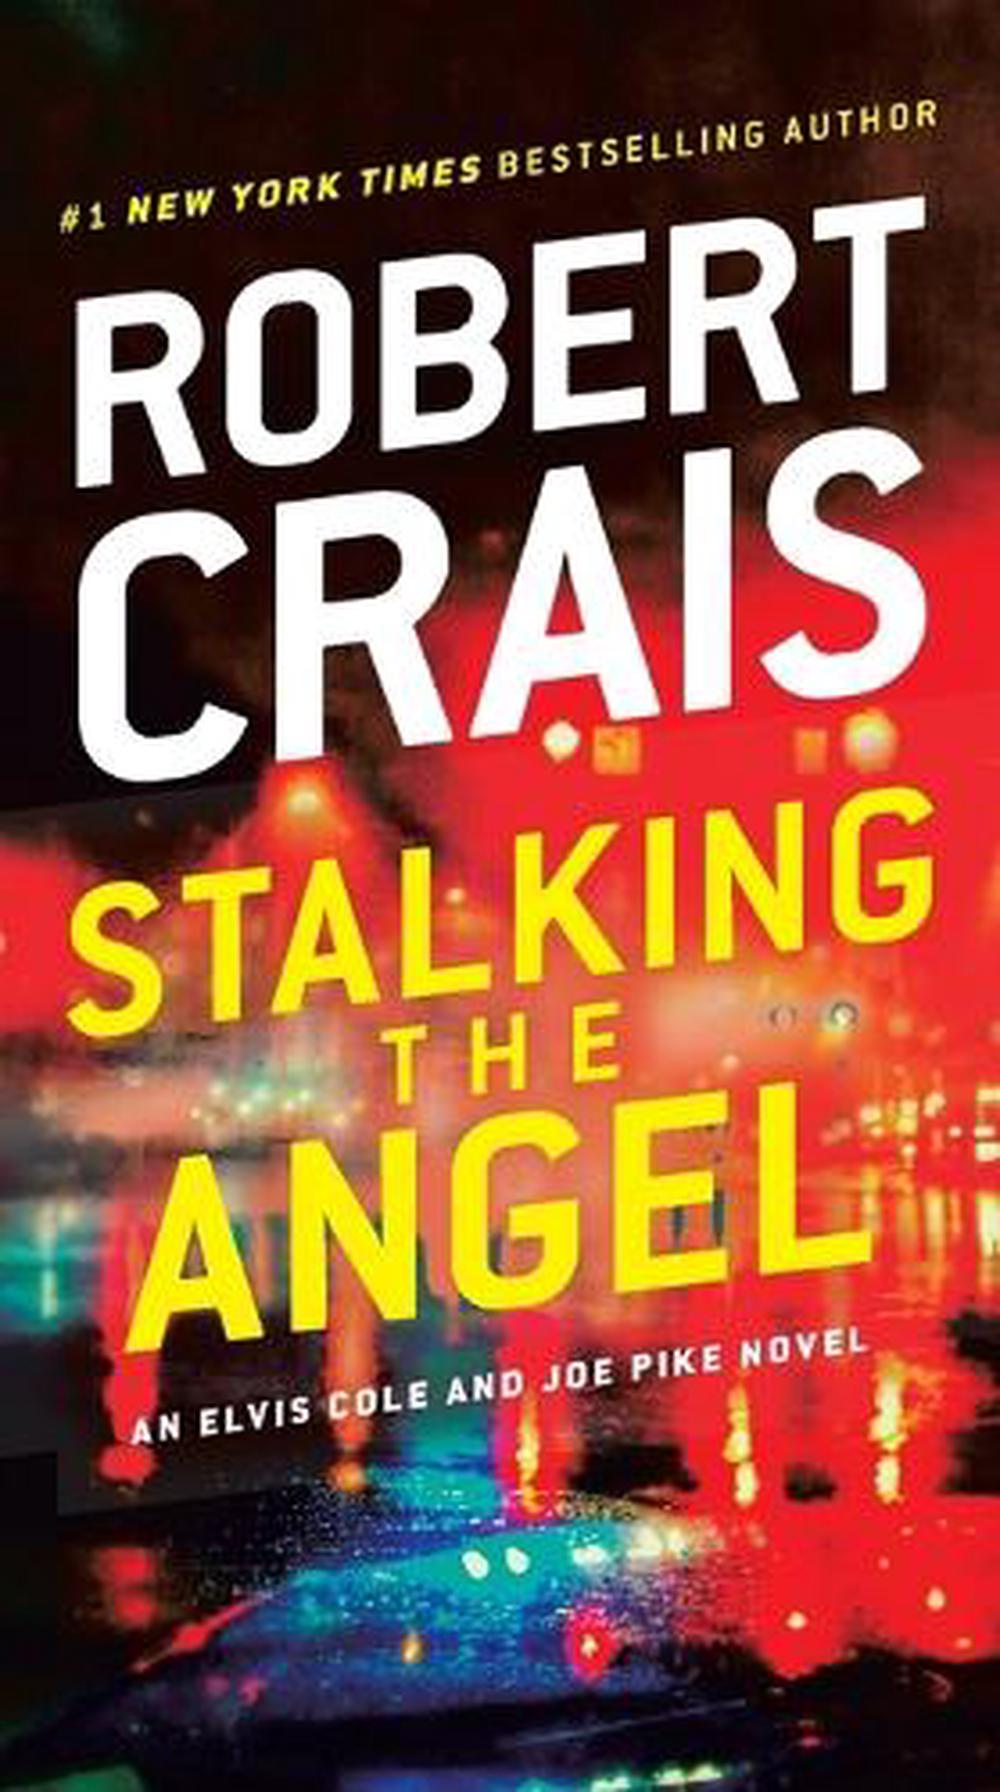 Stalking the Angel An Elvis Cole and Joe Pike Novel by Robert Crais